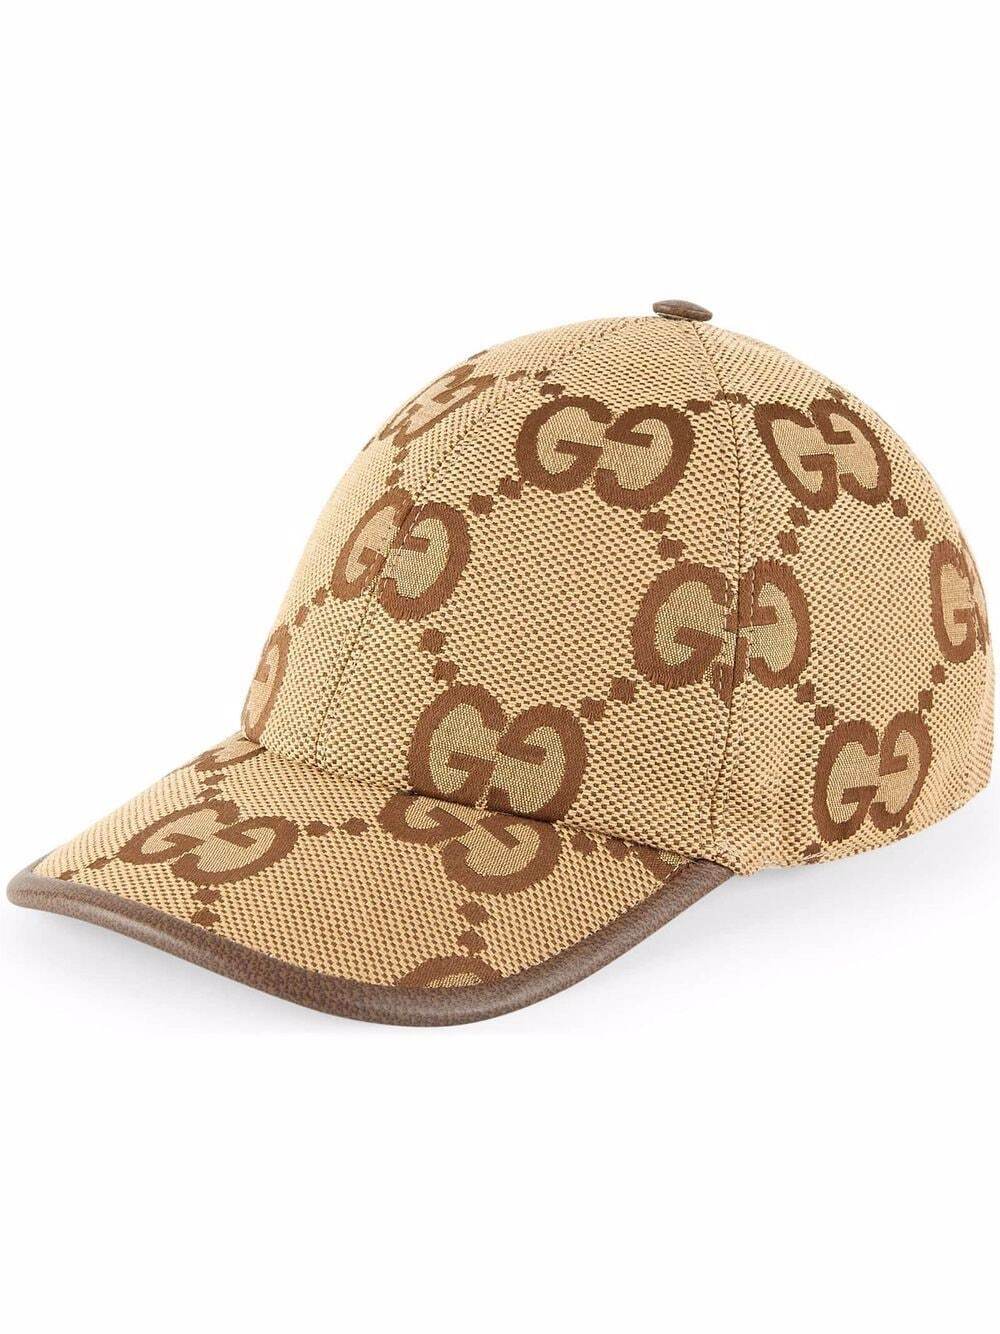 Jumbo GG canvas baseball hat